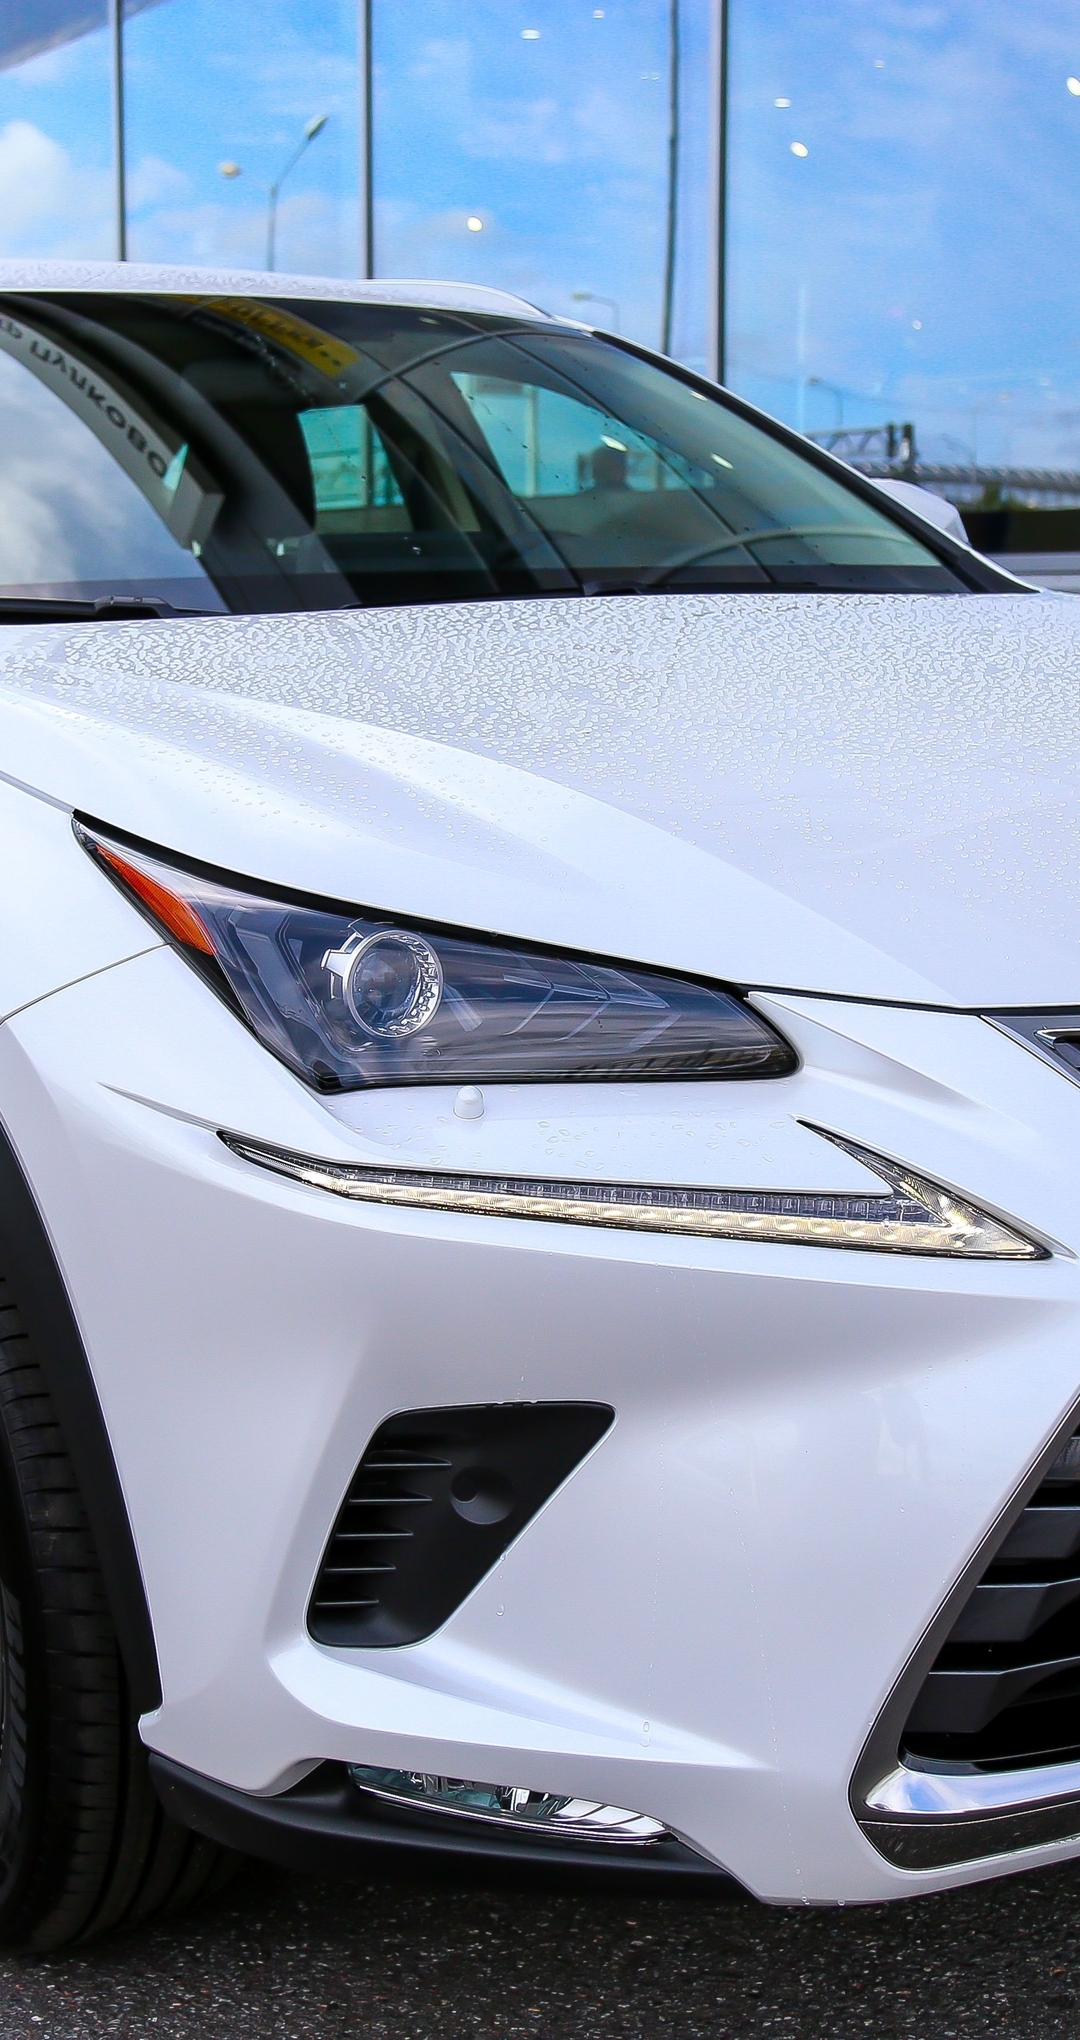 Image: Lexus, car, white